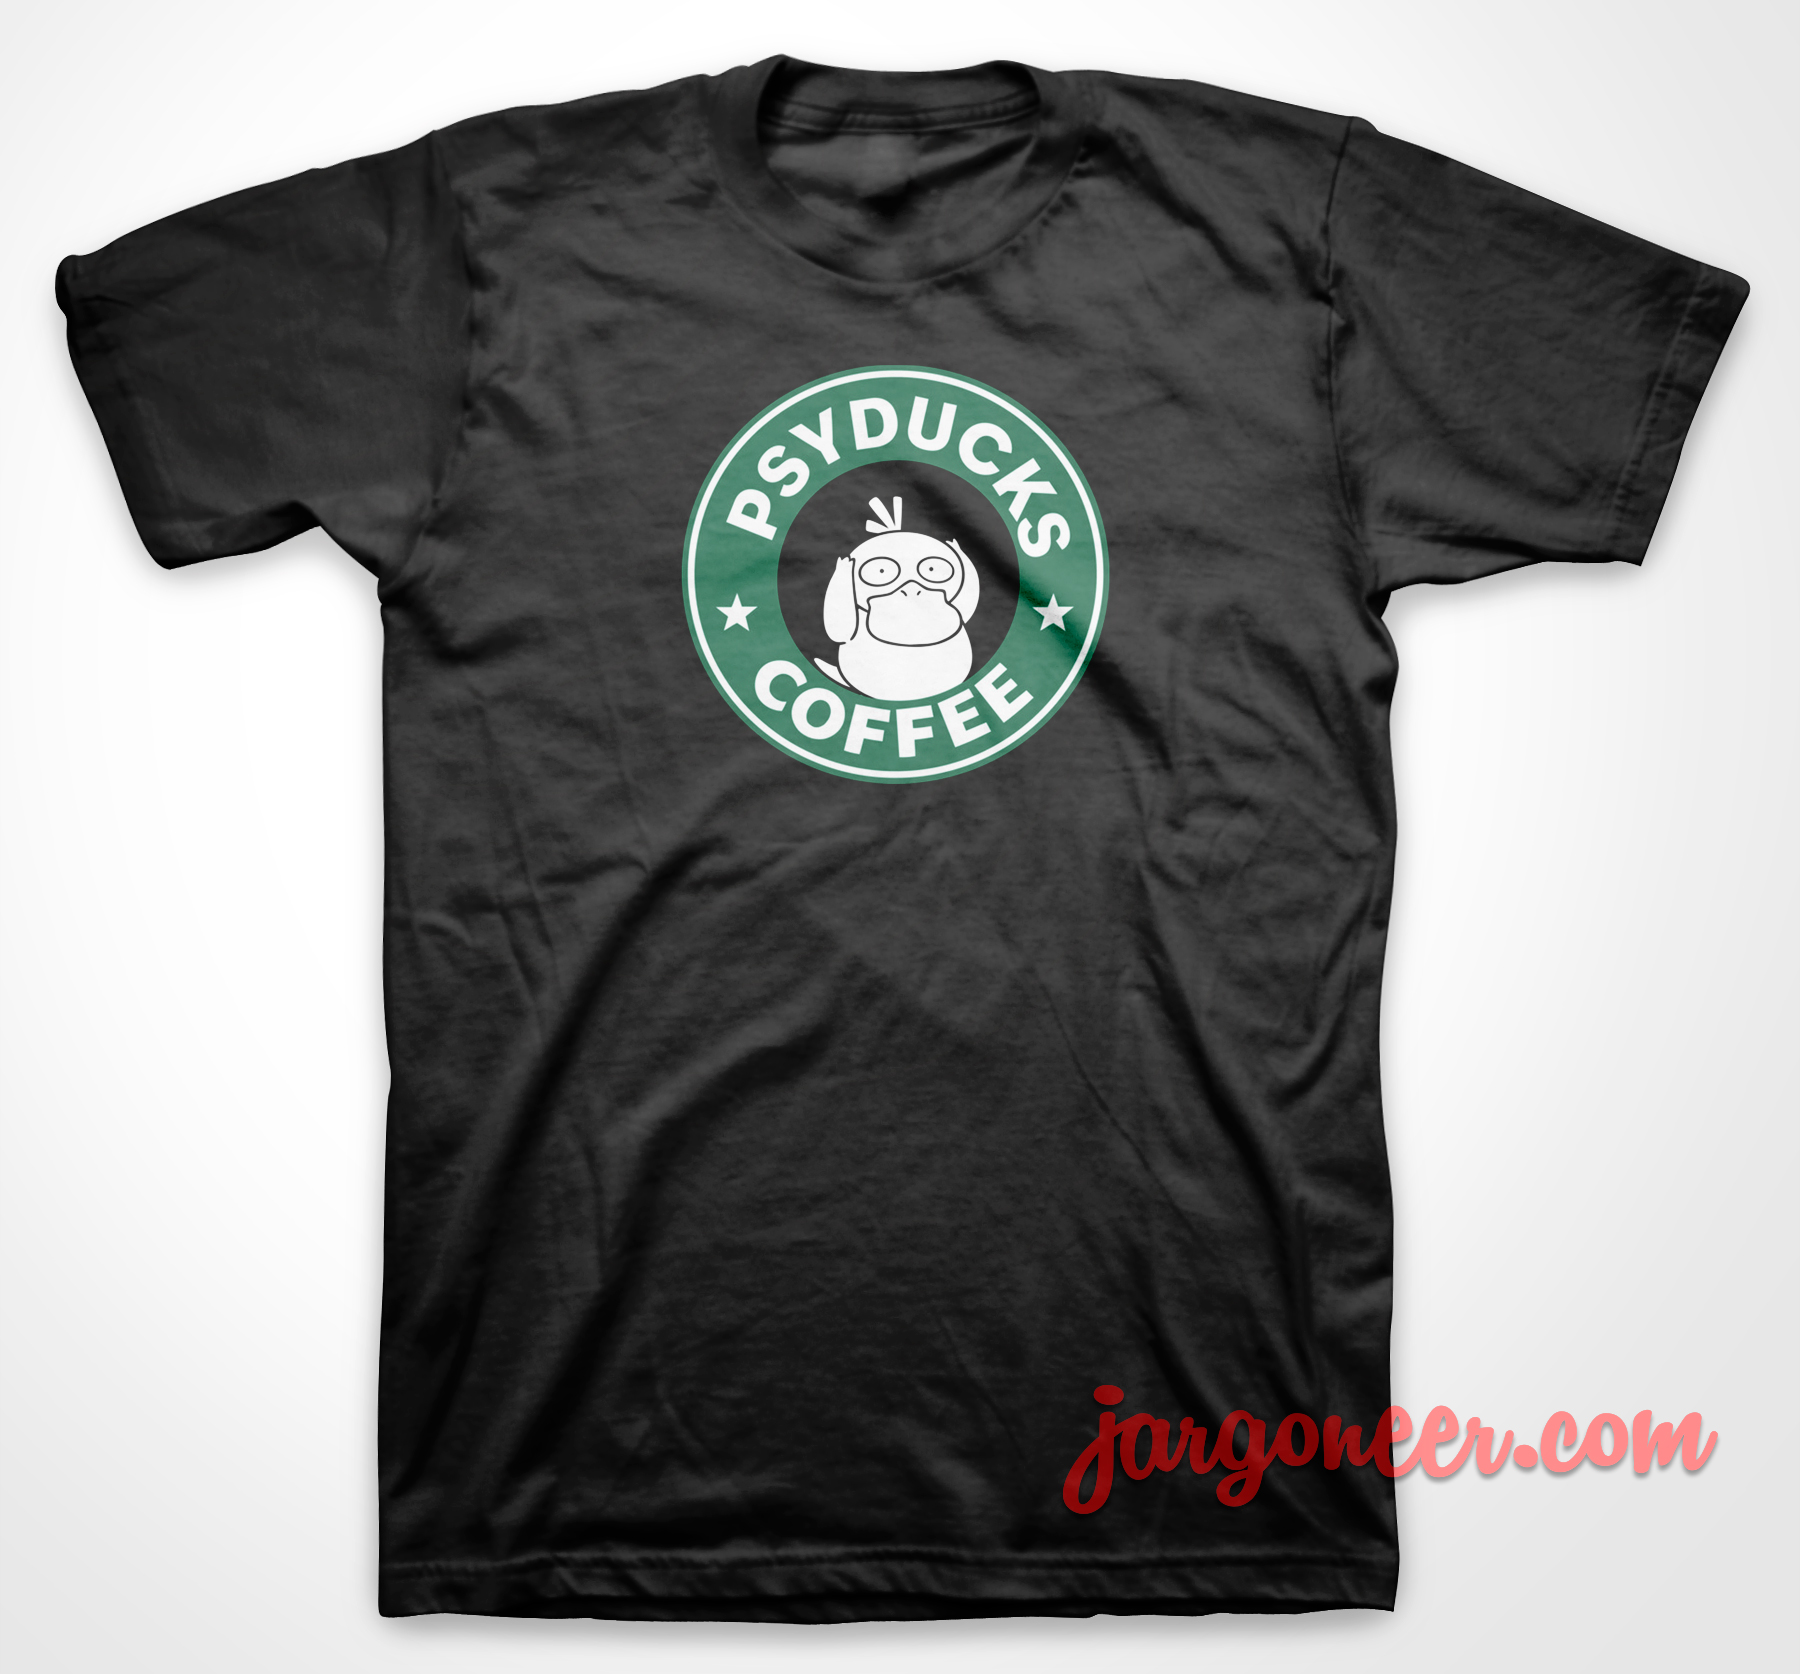 Psyduck Coffee - Shop Unique Graphic Cool Shirt Designs